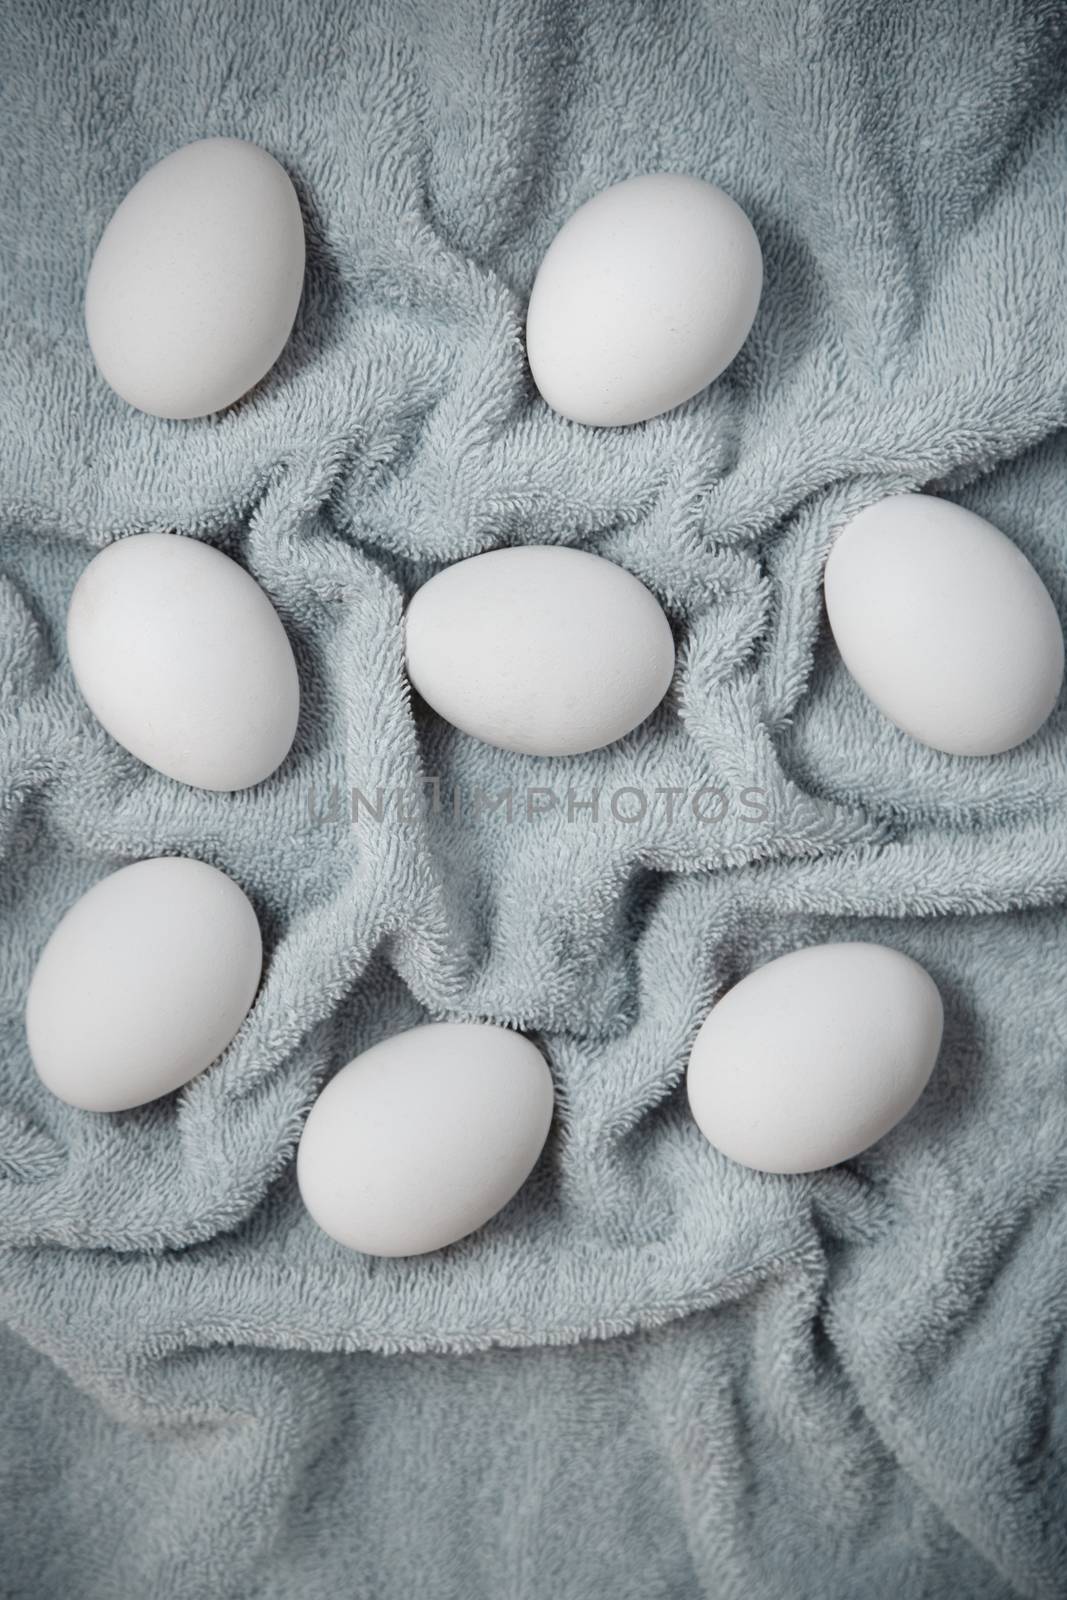 Chicken eggs on a fiber by Novic